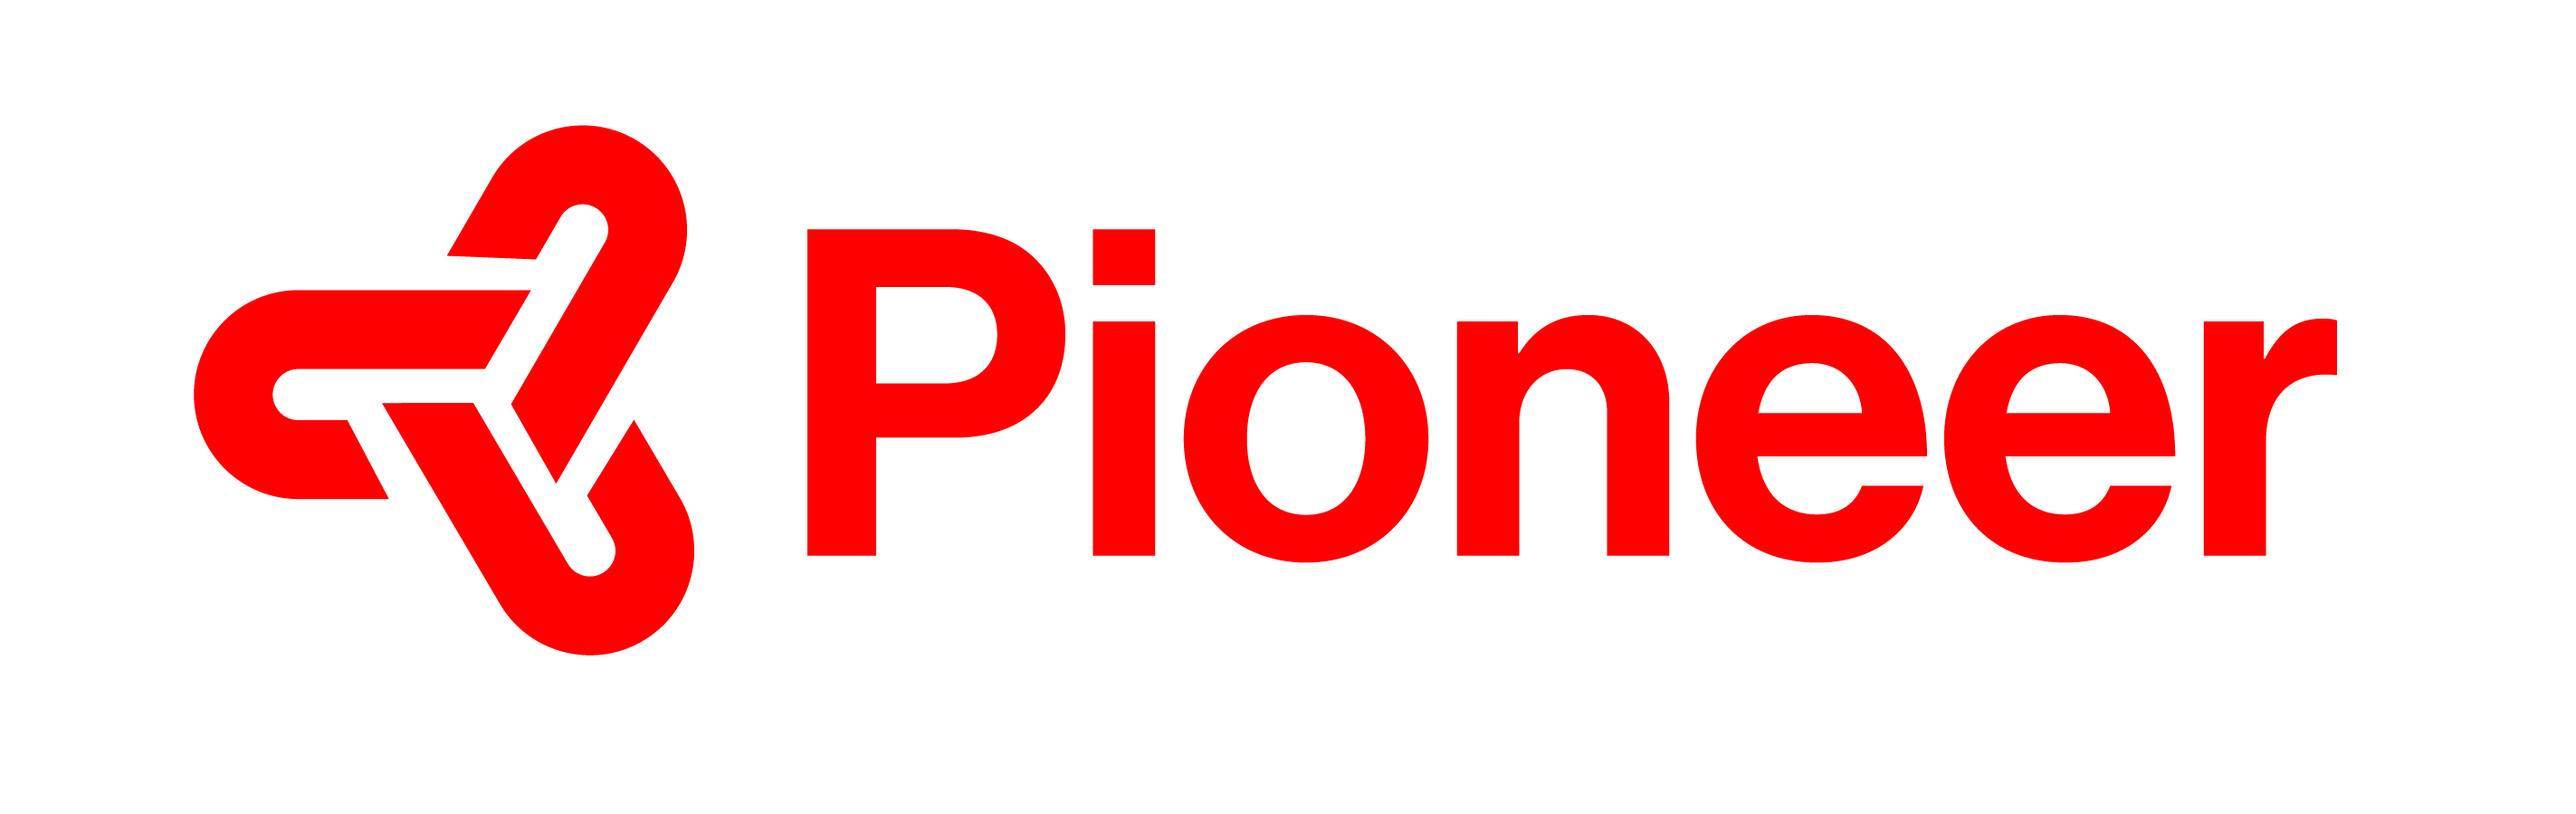 project logo pioneer